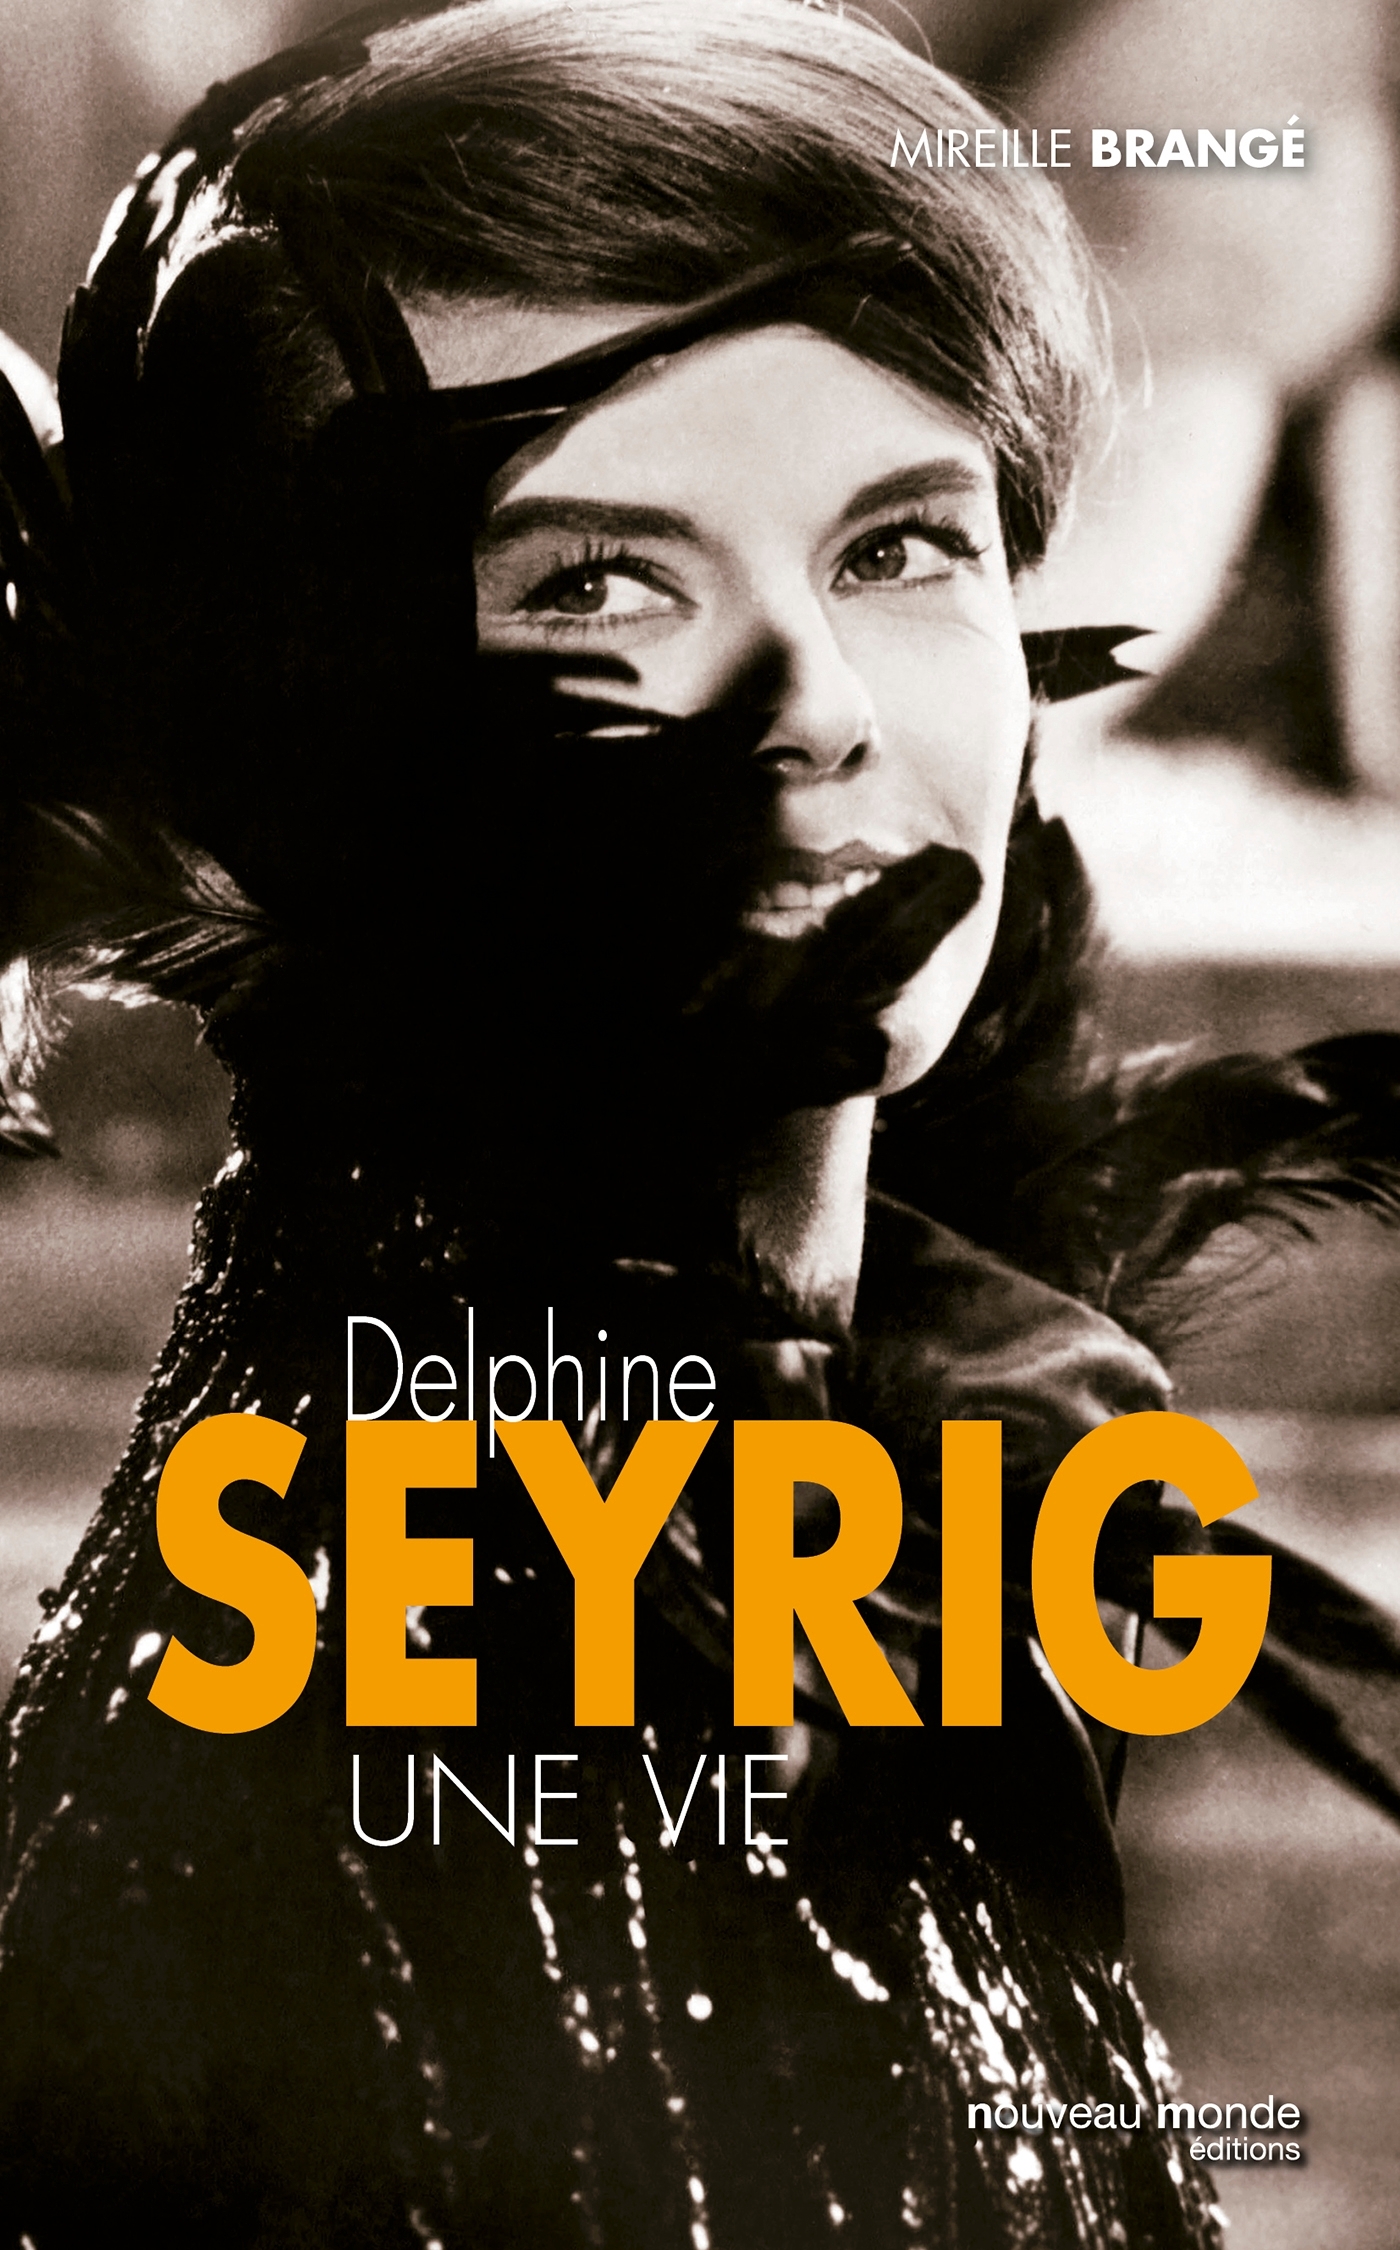 Delphine Seyrig, Une vie (9782369426660-front-cover)